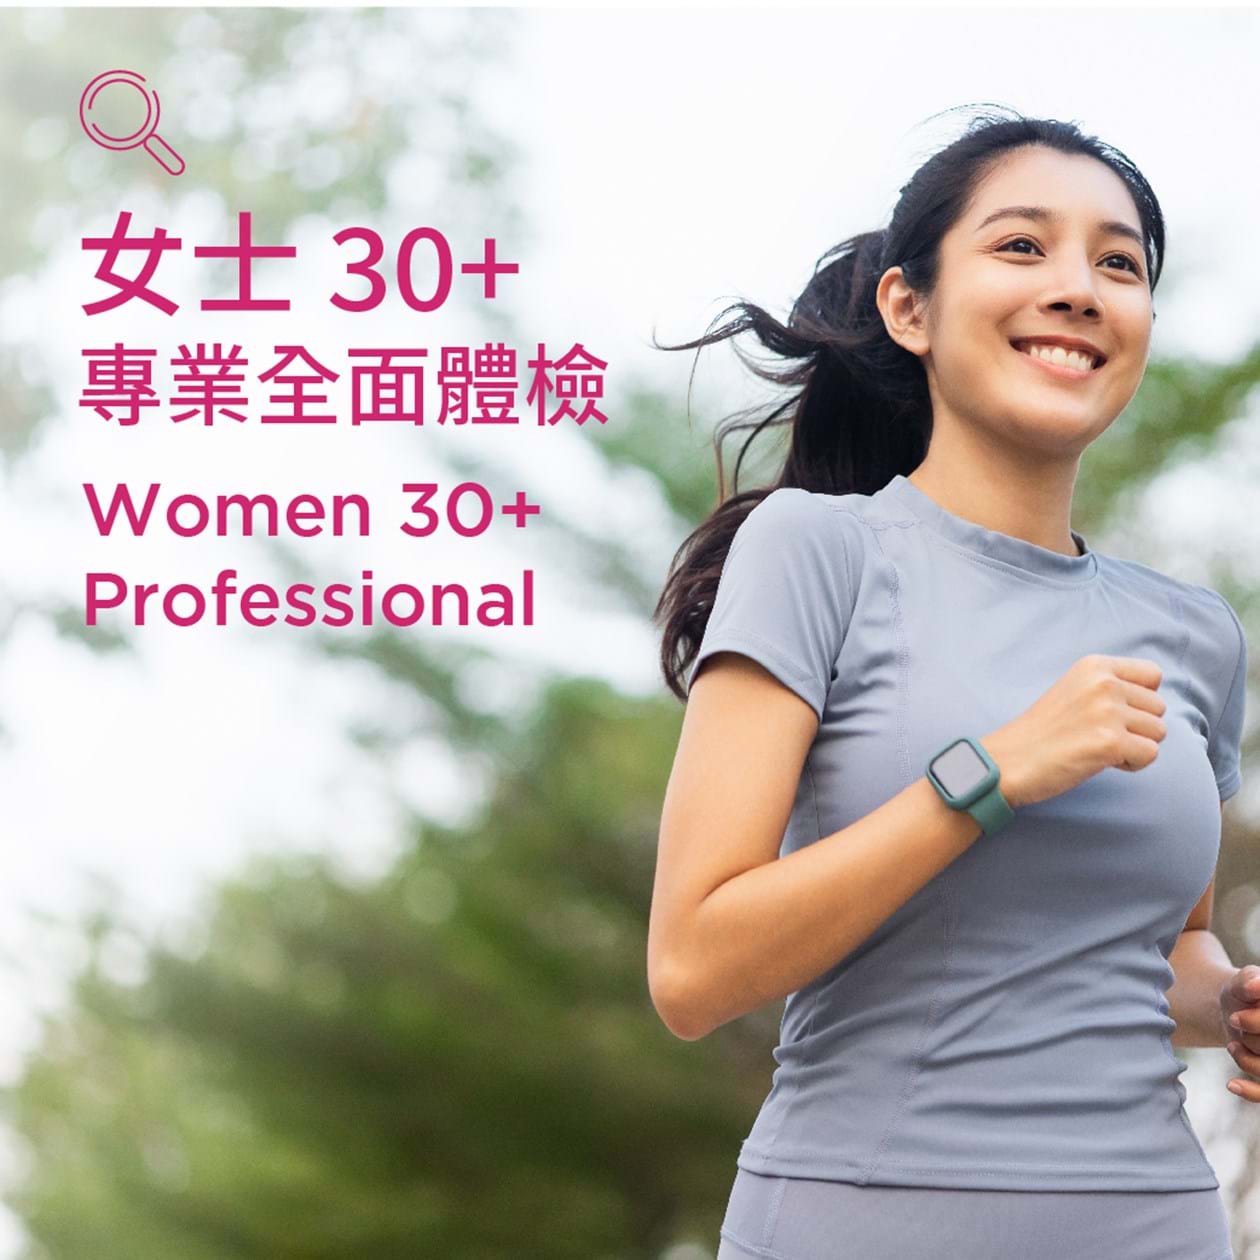 Women 30+ (Professional)